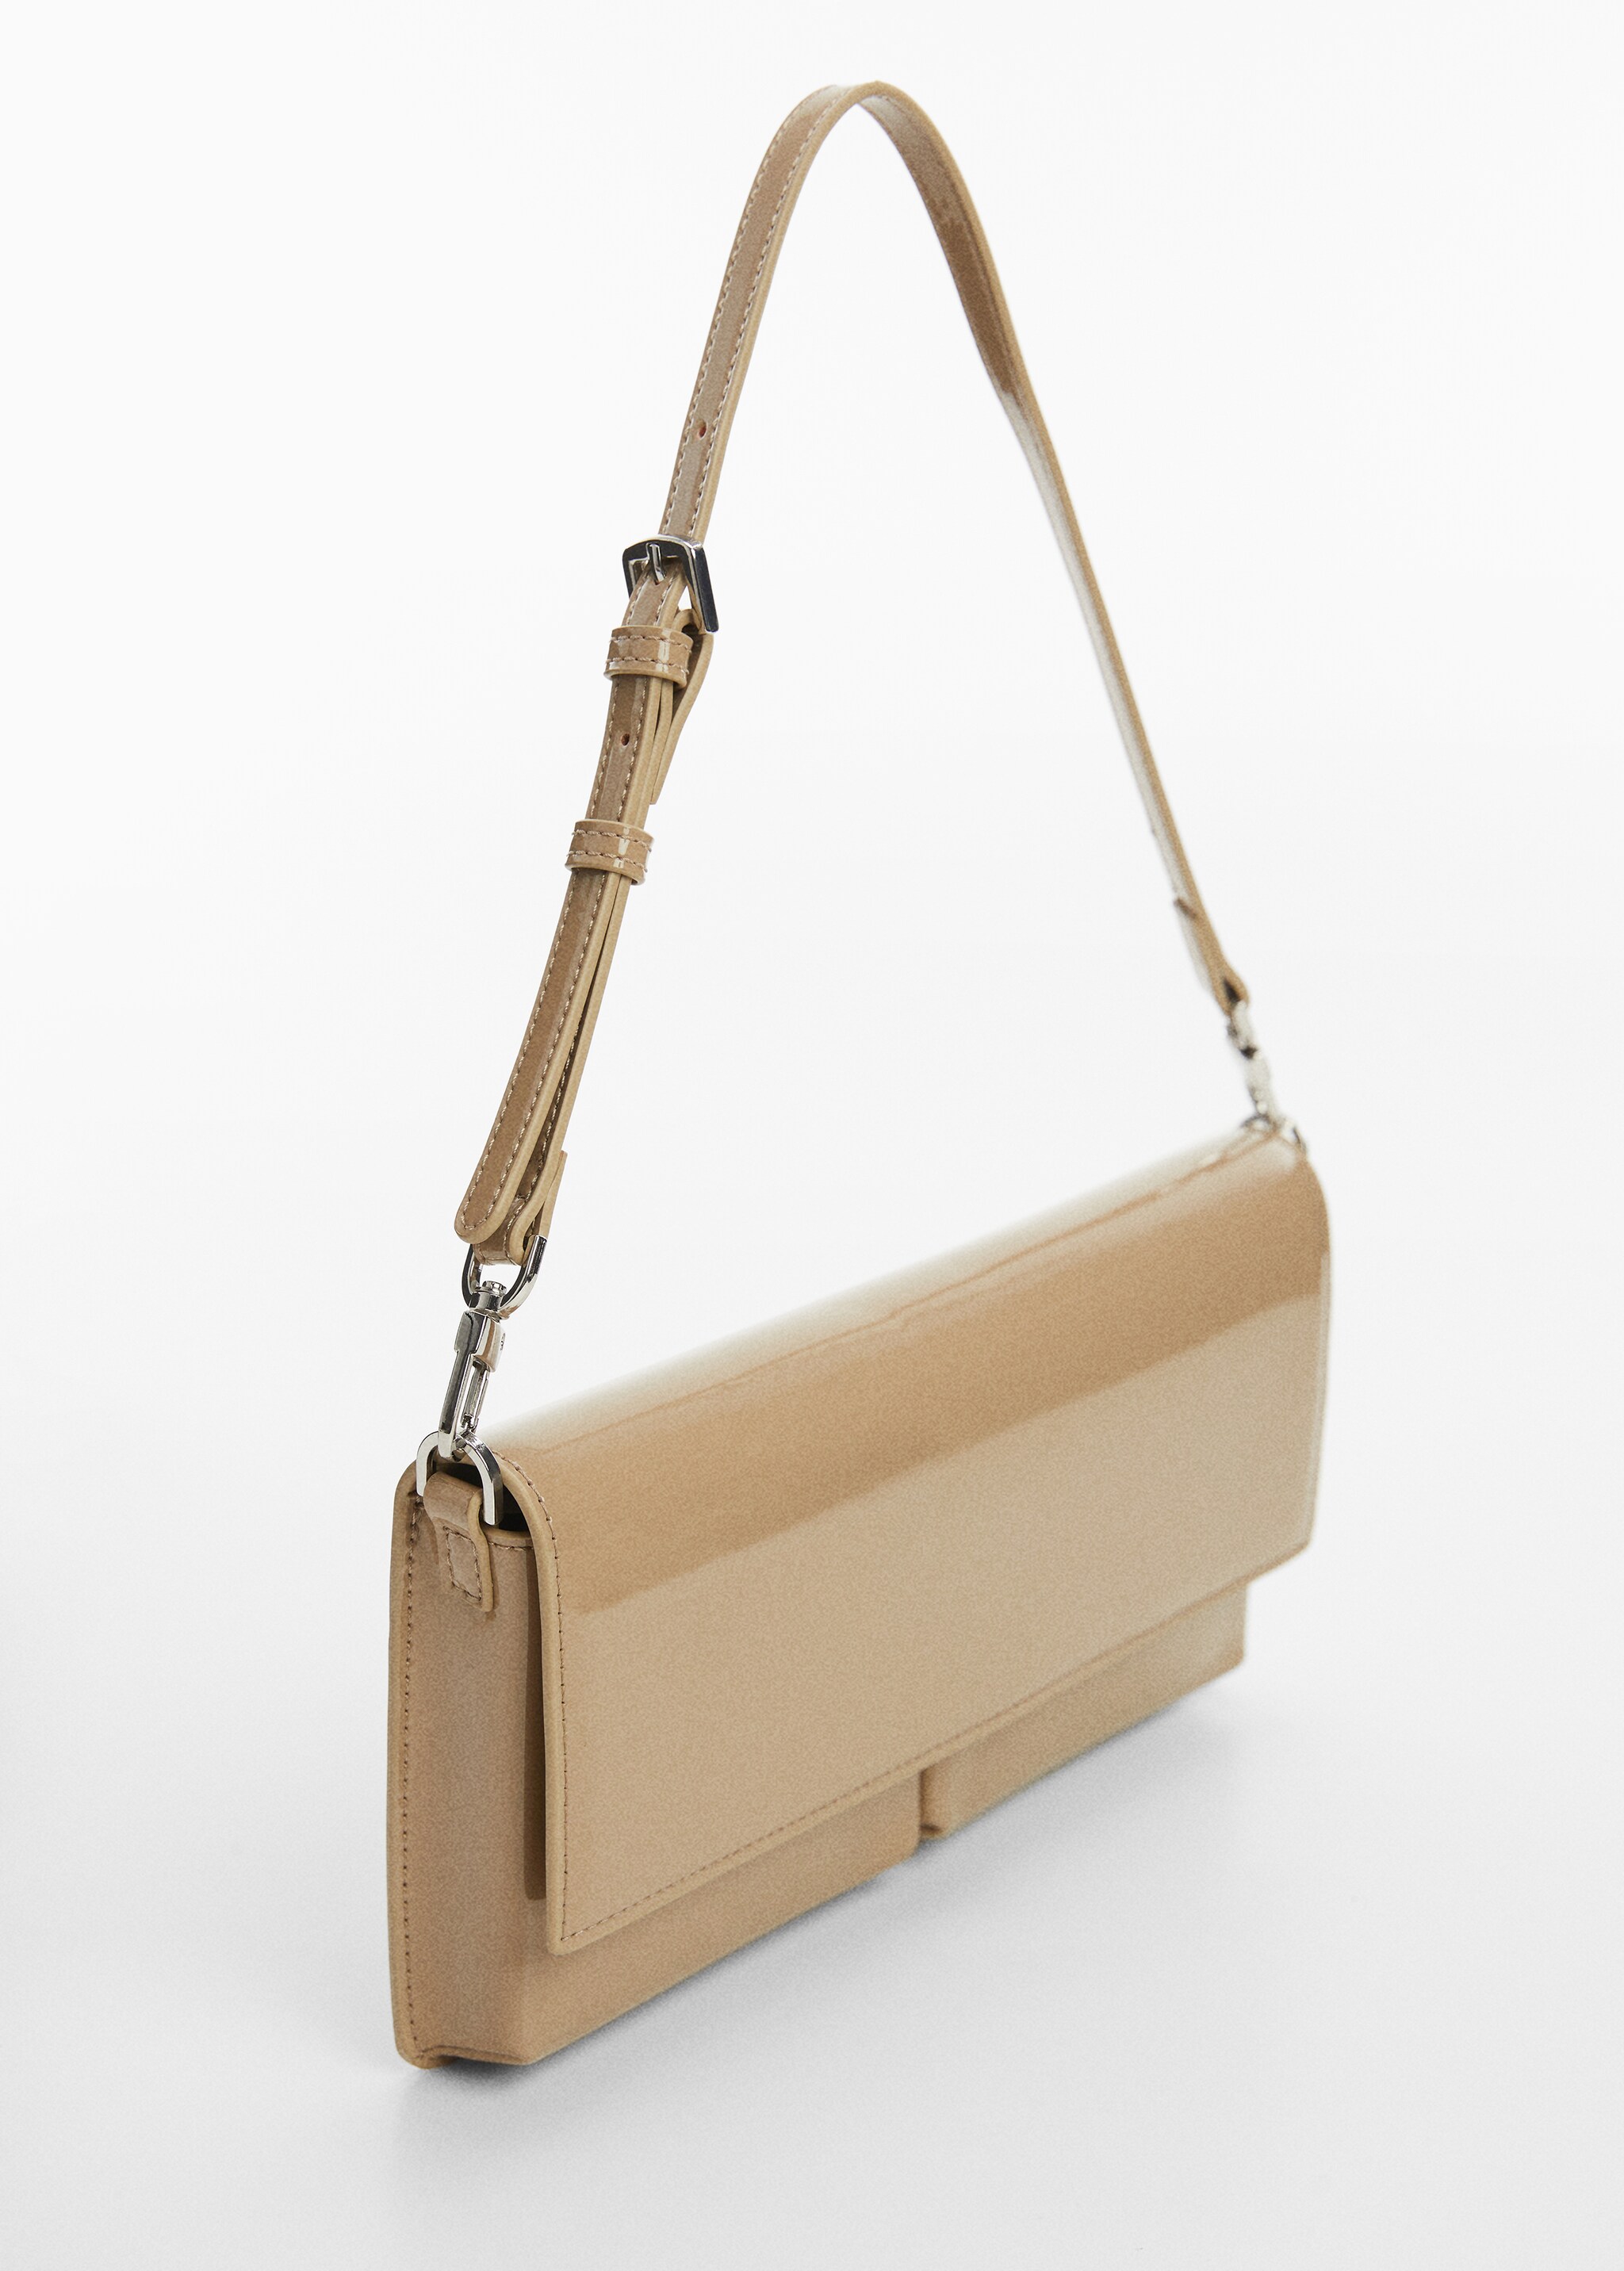 Patent leather effect double compartment bag - Medium plane